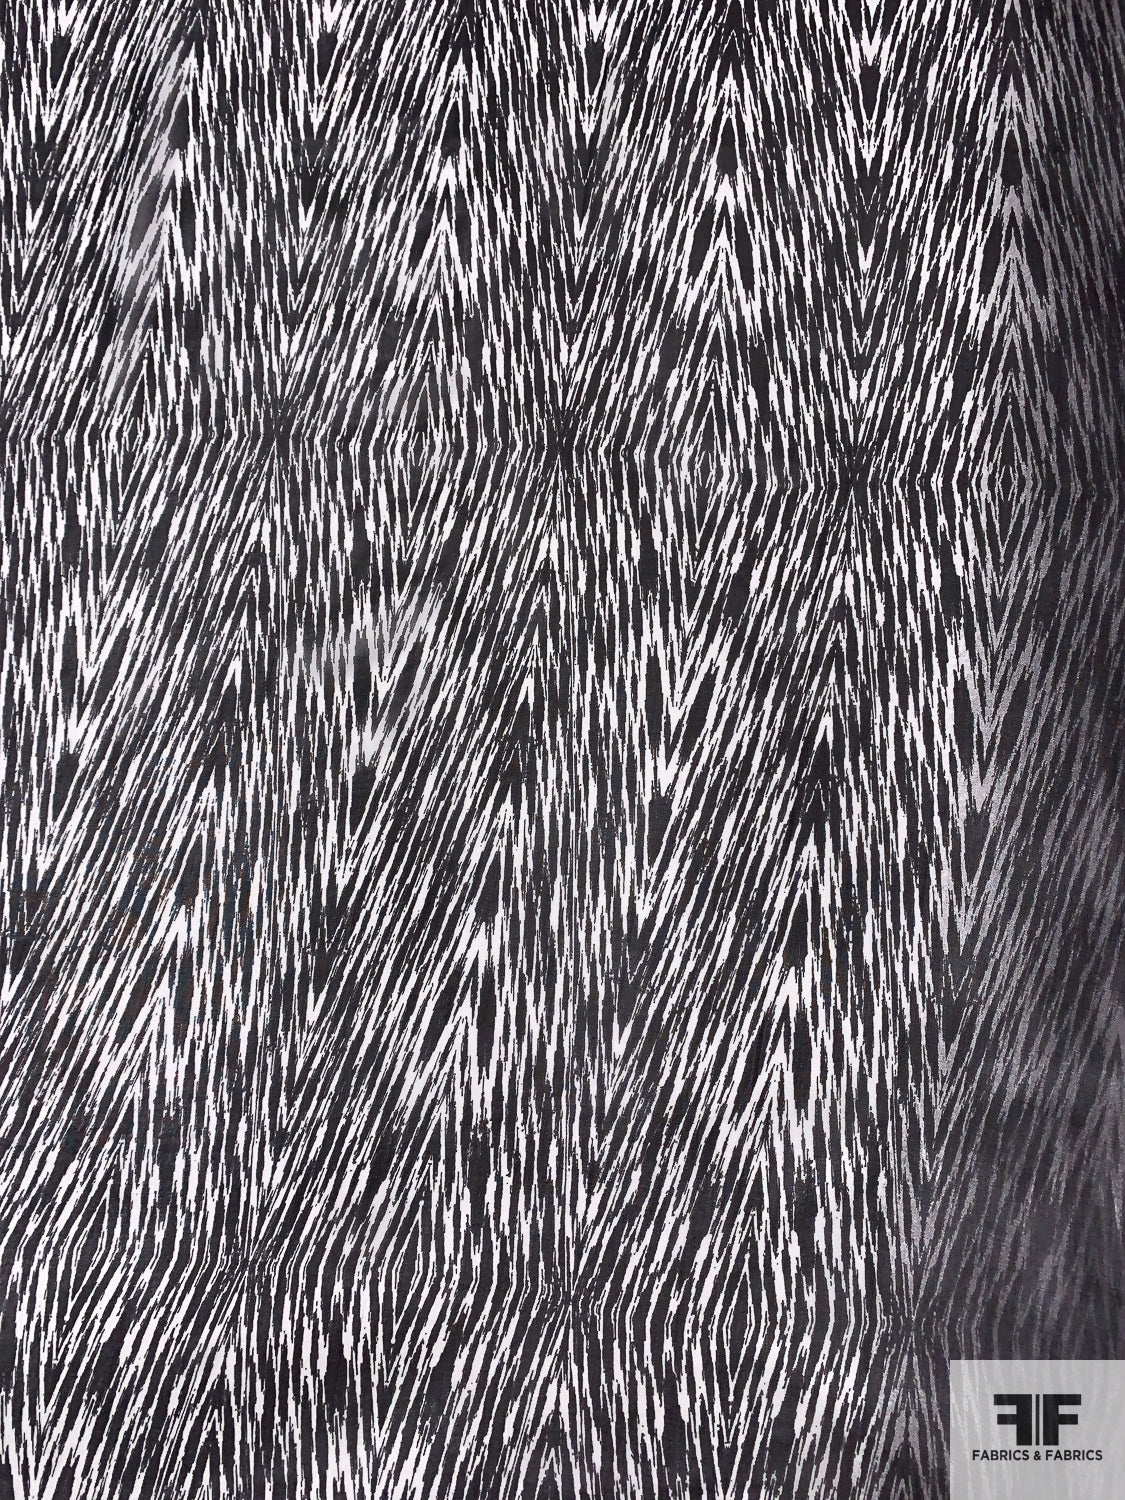 Hazy Ikat-Inspired Printed Silk Chiffon - Black / Off-White / Grey